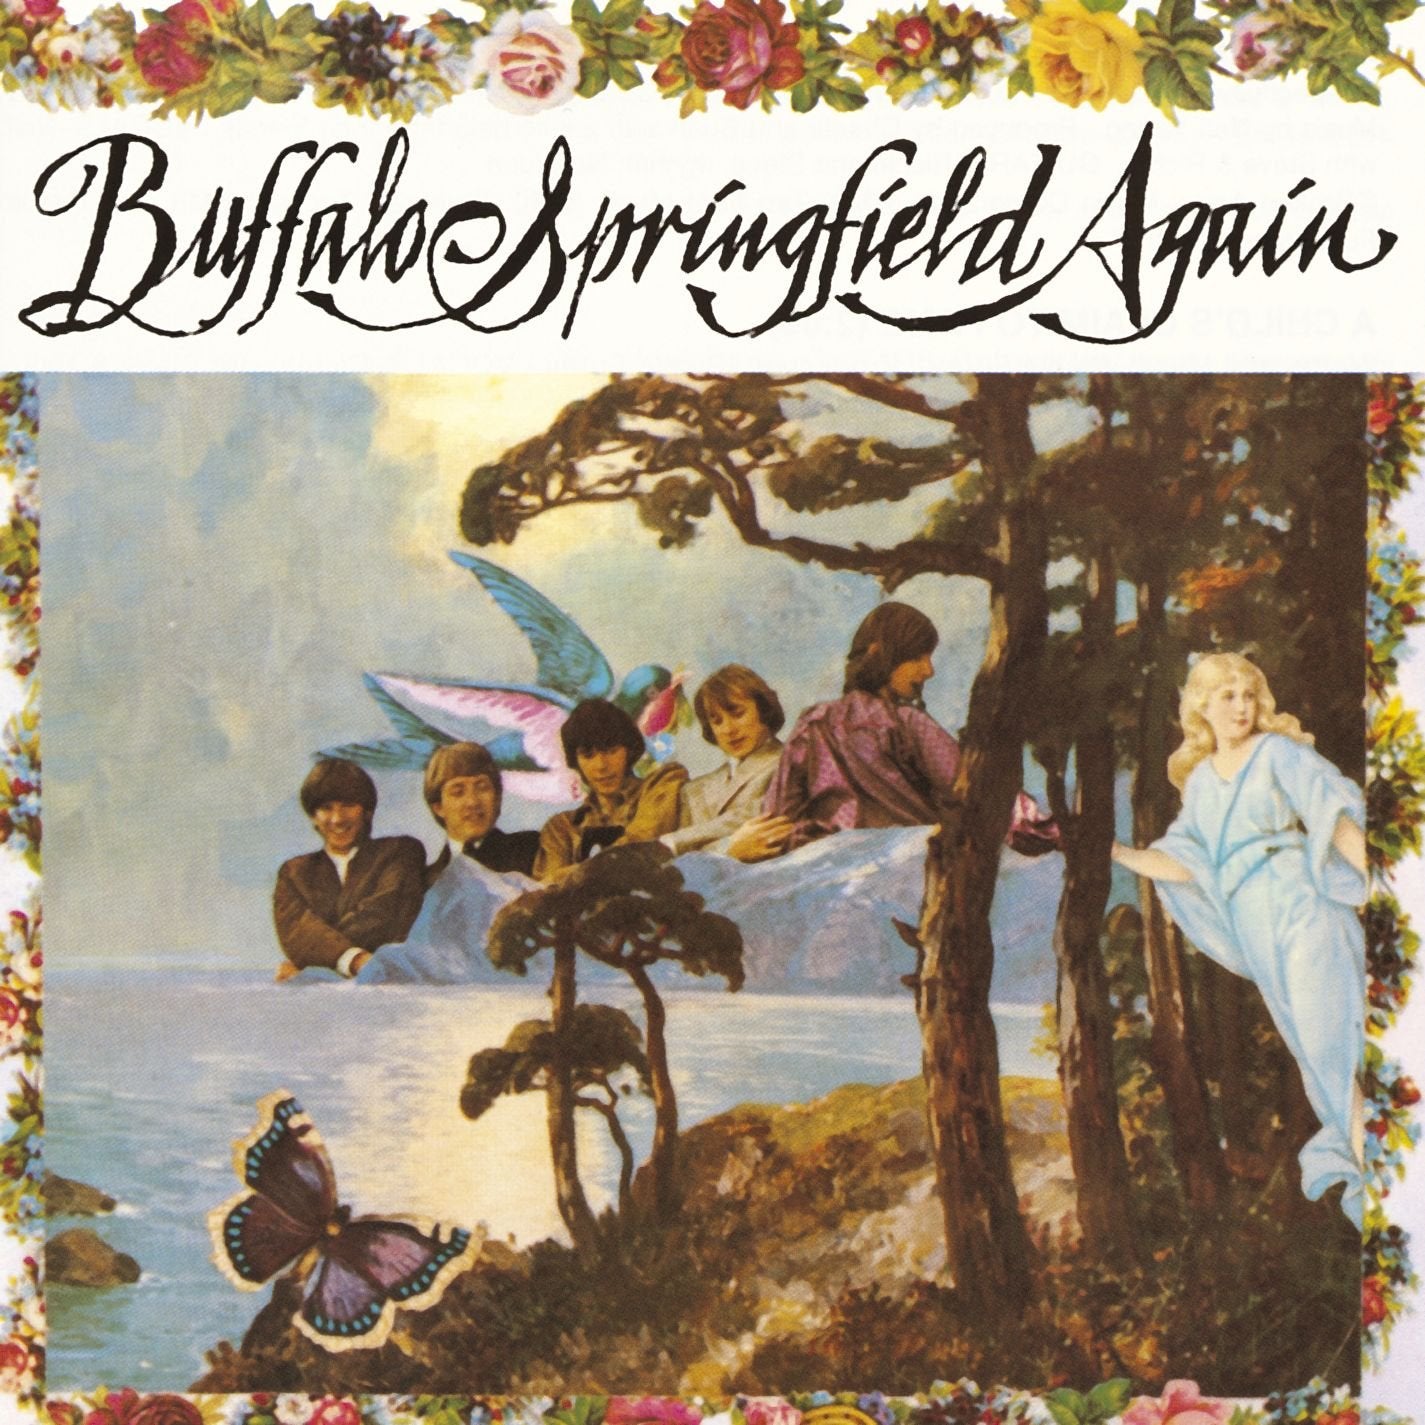 Buffalo Springfield - Buffalo Springfield Again (180 Gram Vinyl, Black) - Vinyl